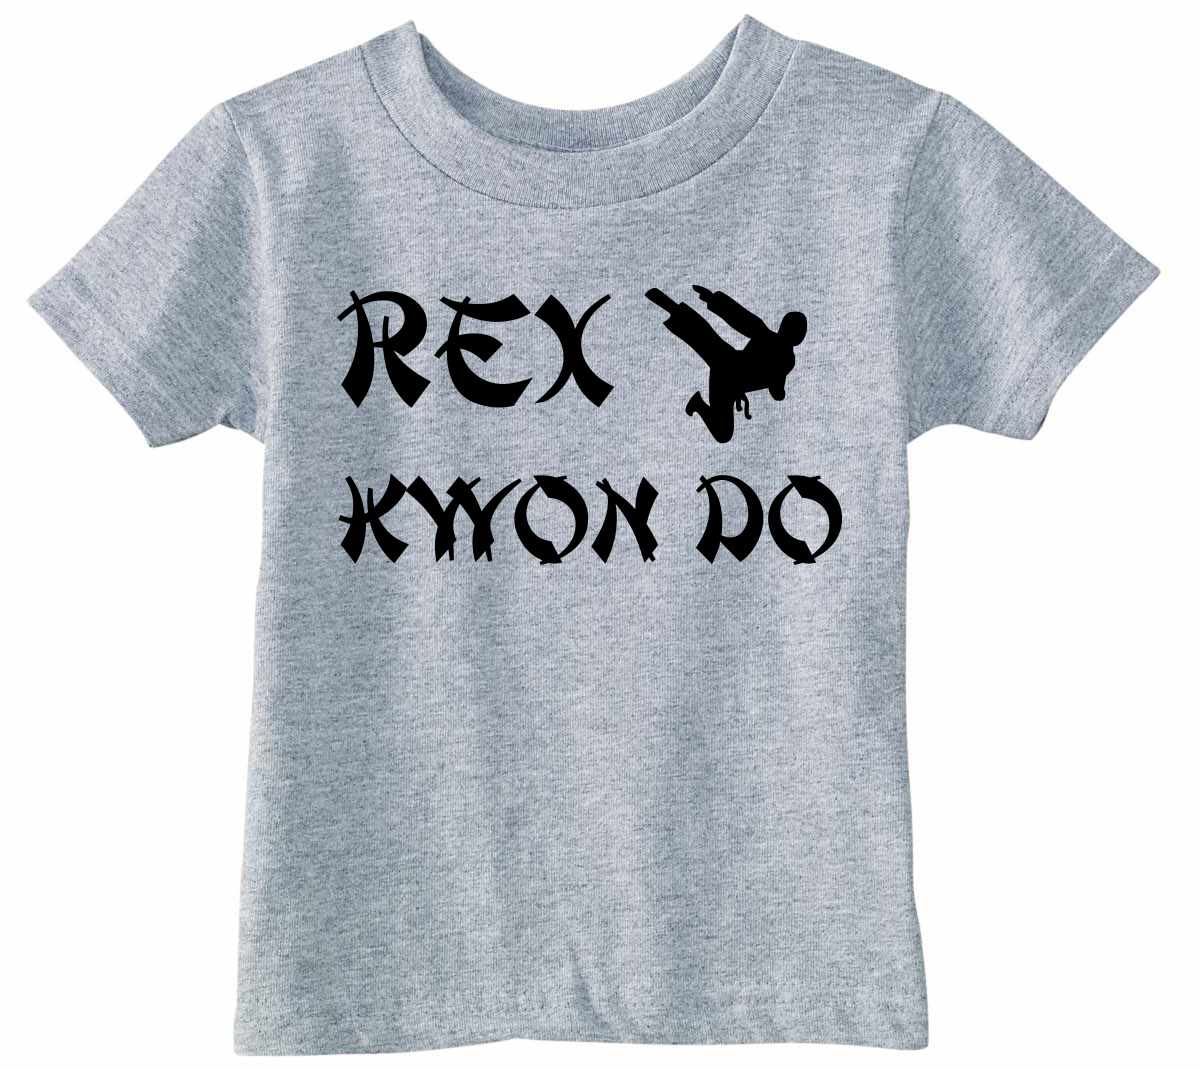 Rex Kwon Do on Infant-Toddler T-Shirt (#1379-7)